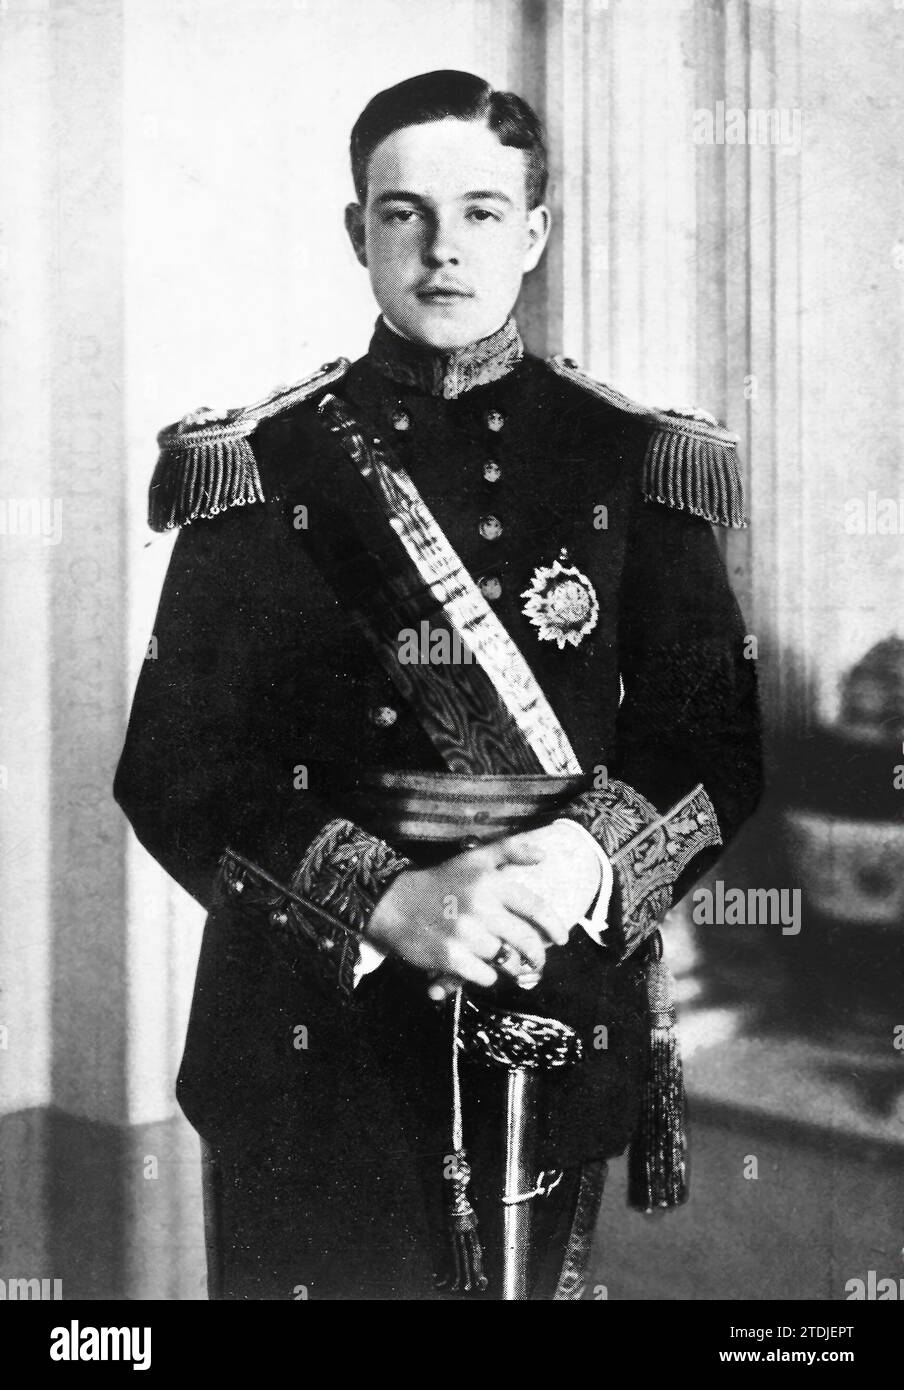 02/18/1908. Portrait of Manuel II of Portugal. Credit: Album / Archivo ABC / Joshua Benoliel Stock Photo